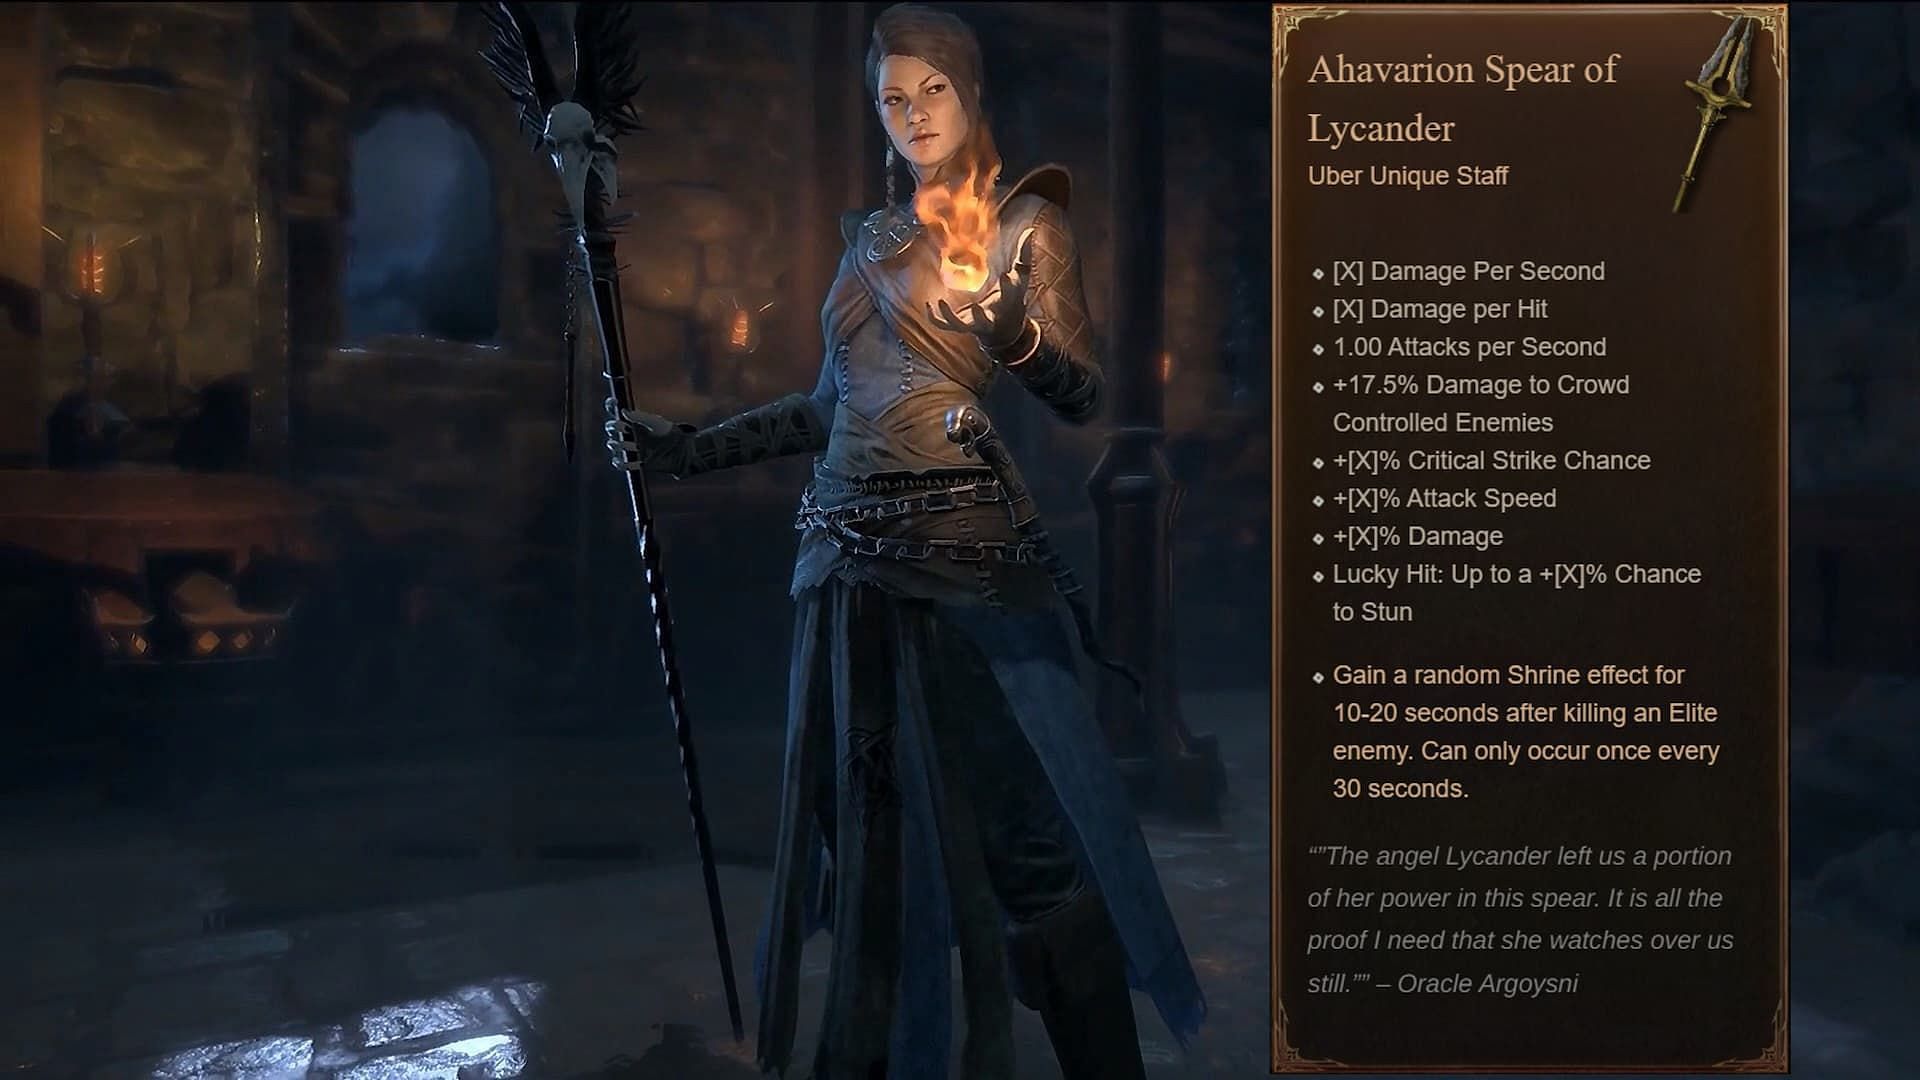 The Ahavarion Spear of Lycander is the new Uber Unique in Diablo 4 (Image via Blizzard)